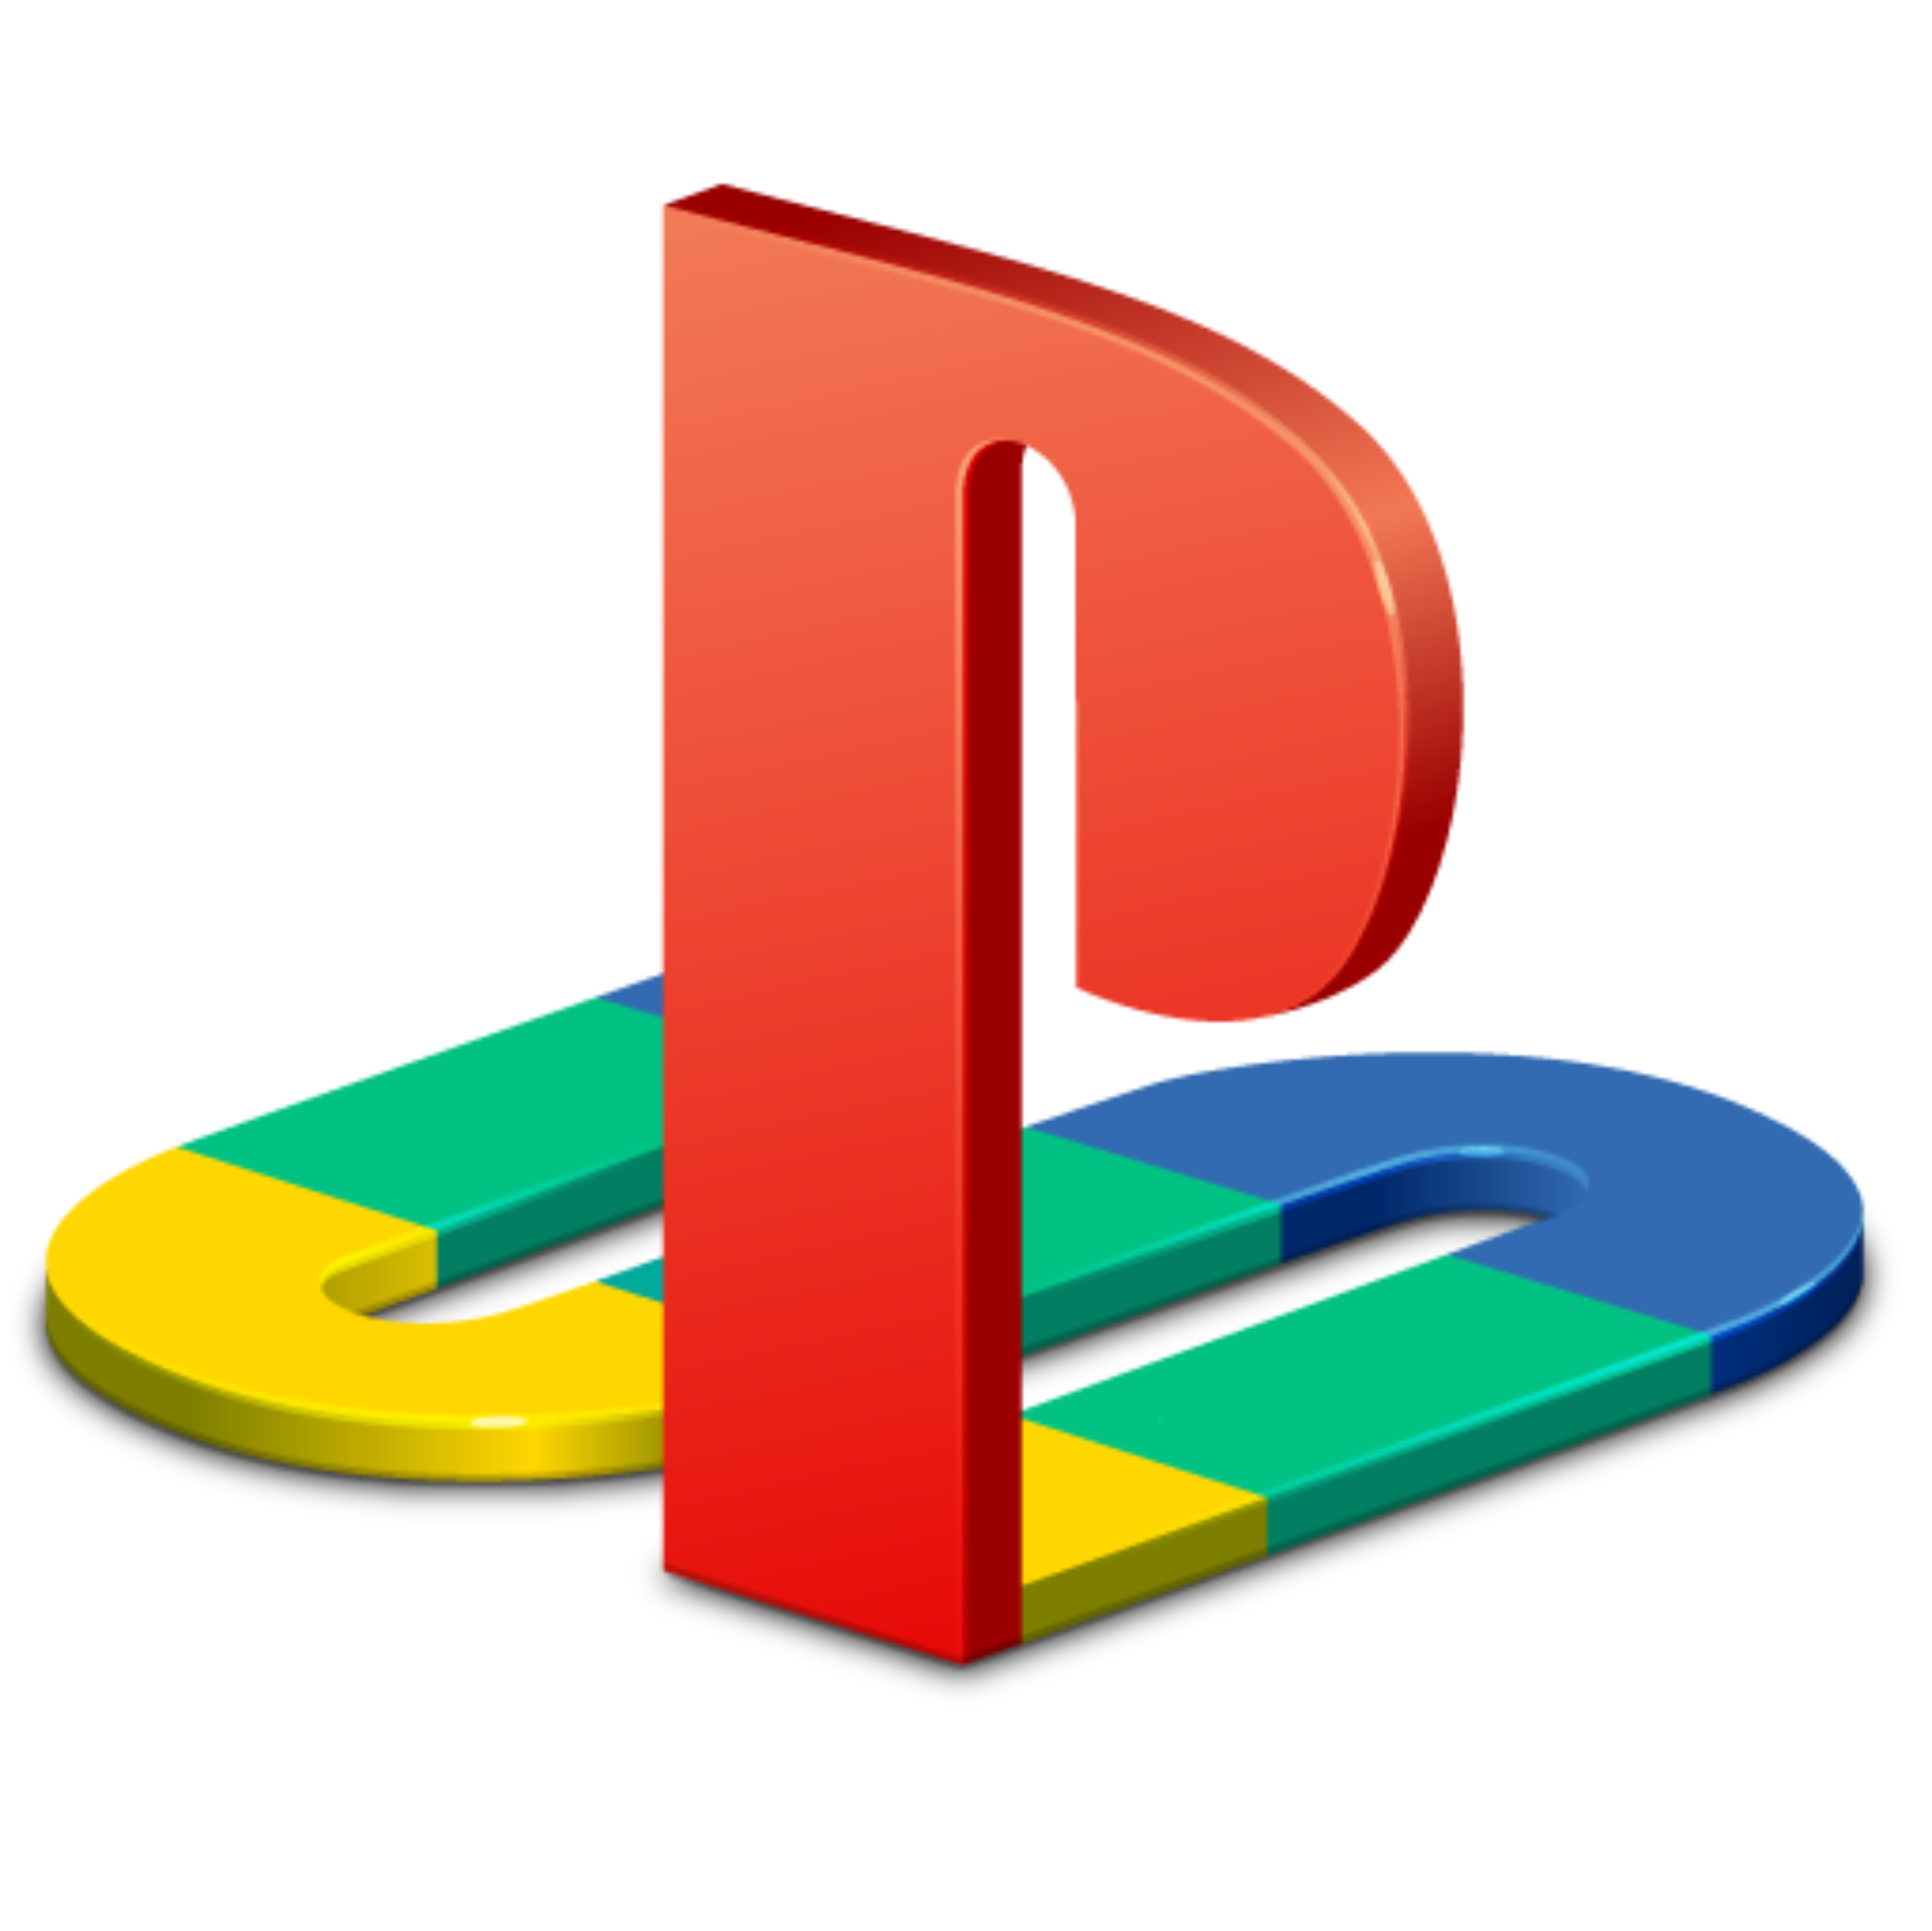 Playstation com файл. Значок ps1. Ps3 ps4 logo. Иконка PLAYSTATION 1. PLAYSTATION надпись.